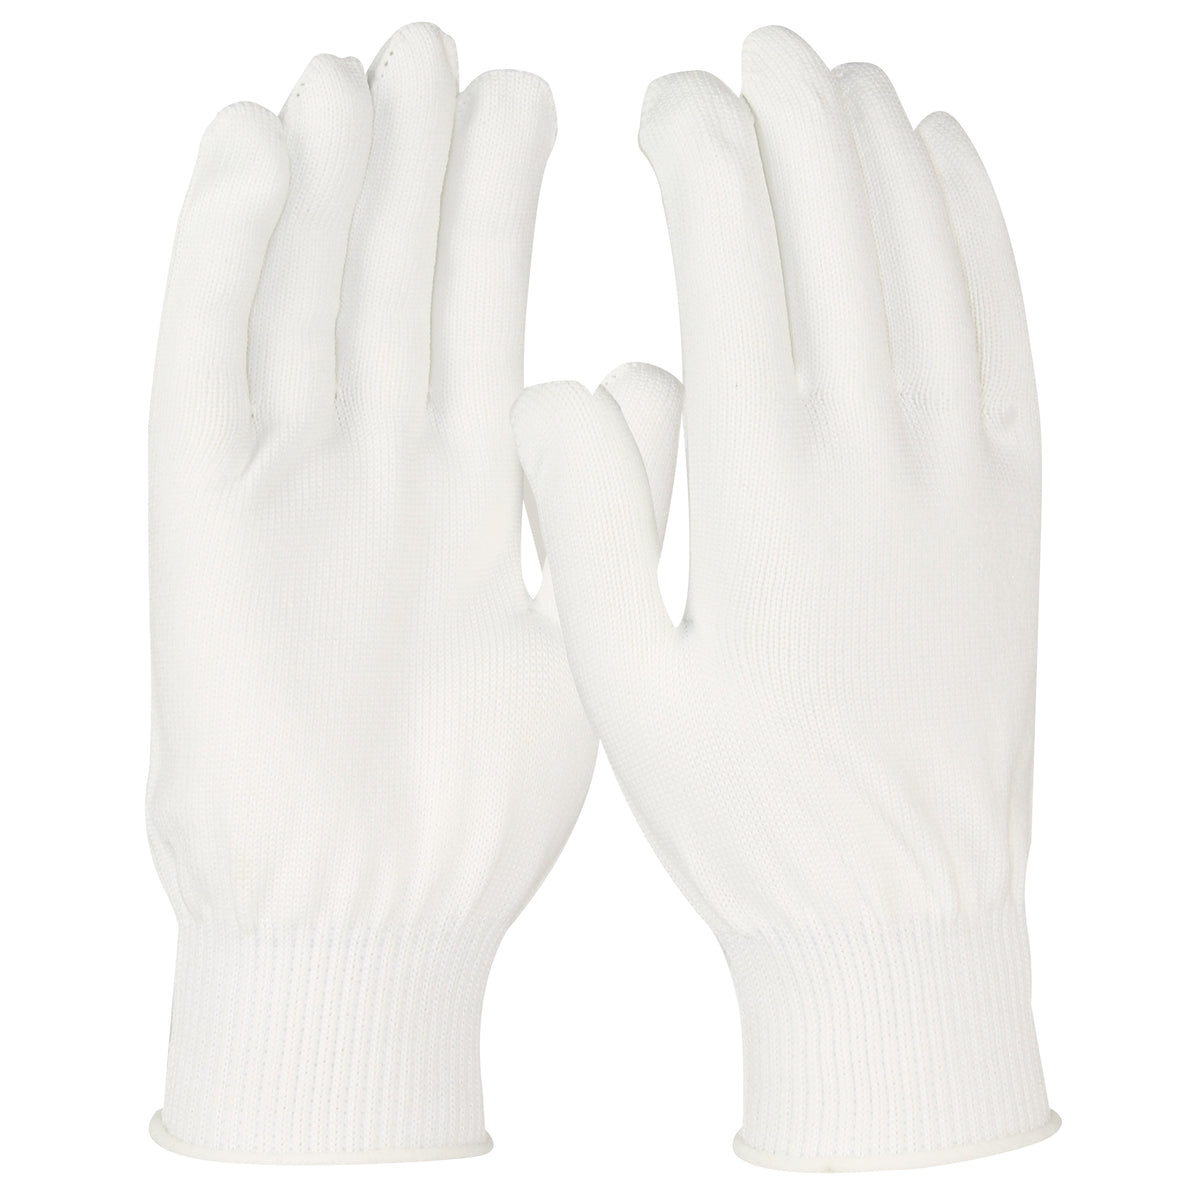 WPP M13P-S Seamless Knit Polyester Glove - Light Weight